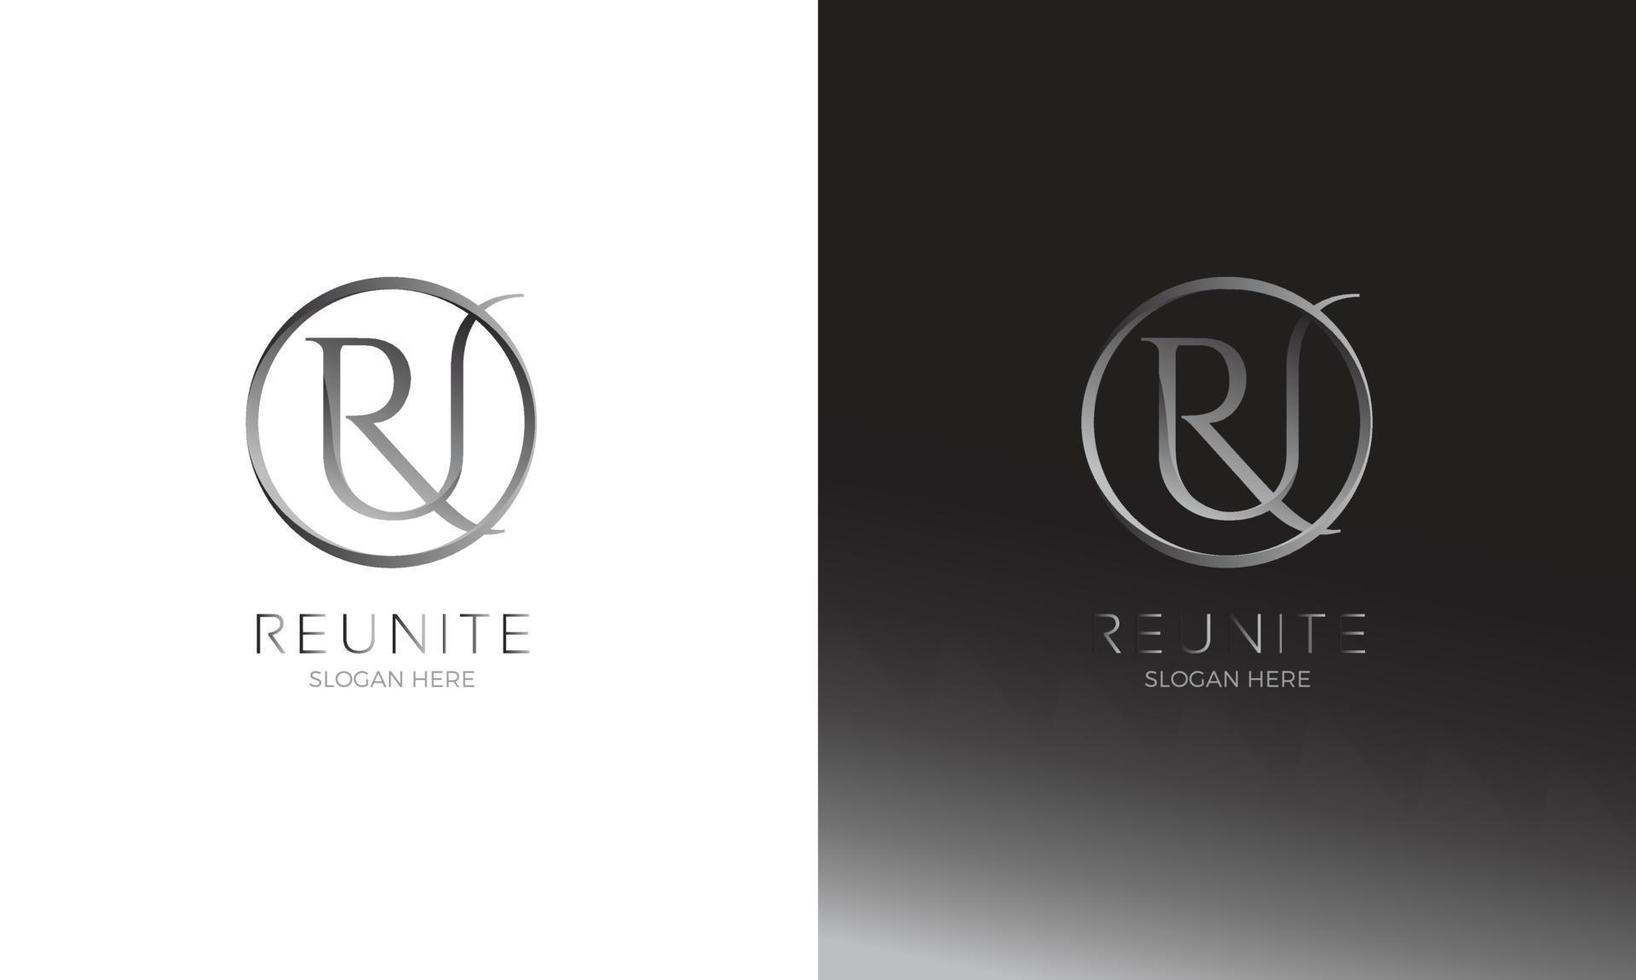 R and U reunite logo vector